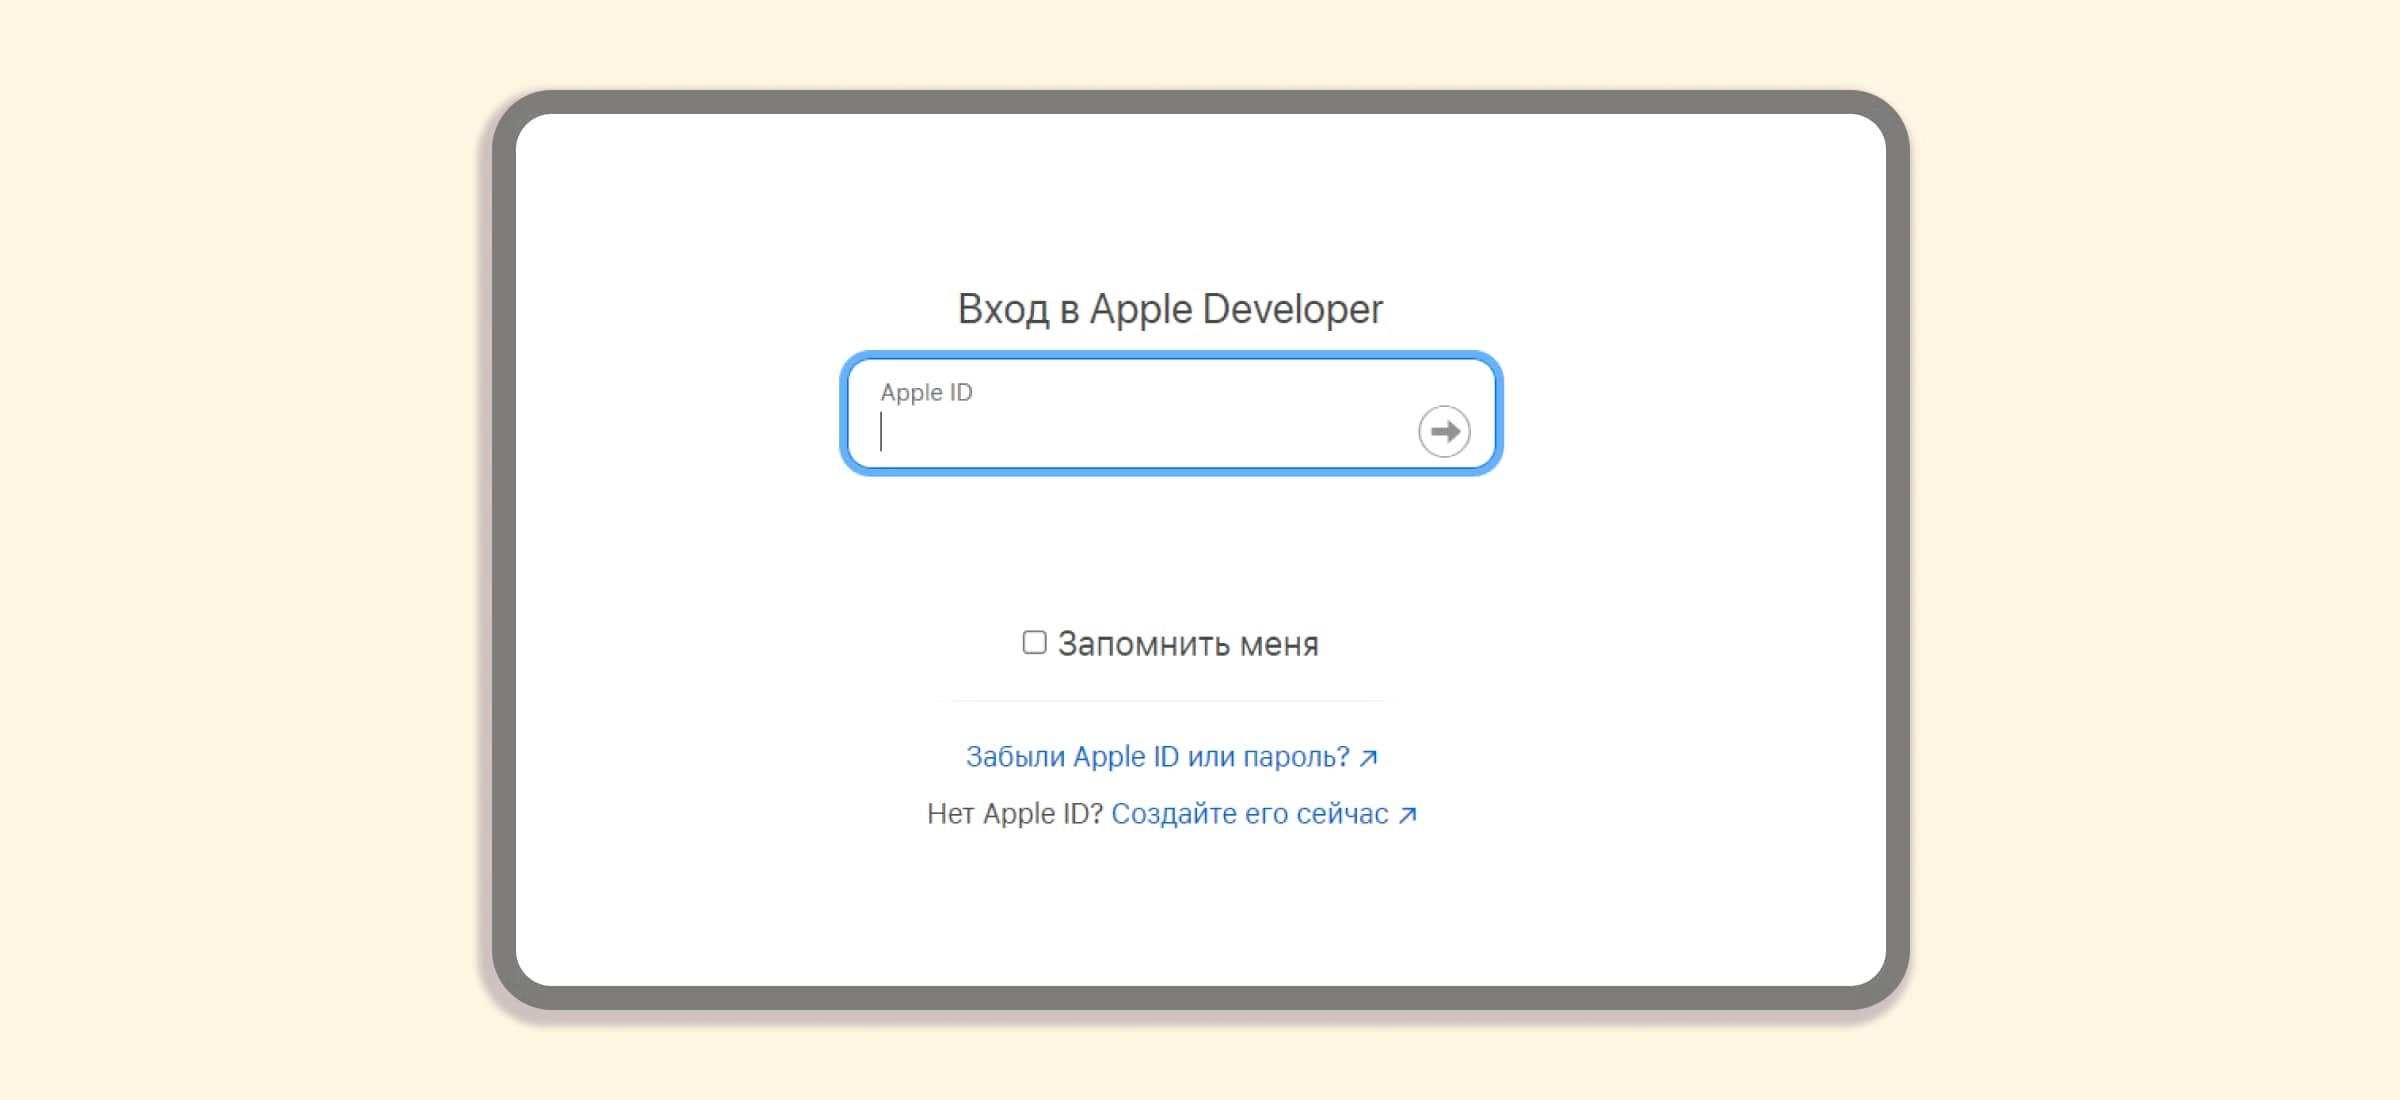 Вход в Apple Developer.jpg